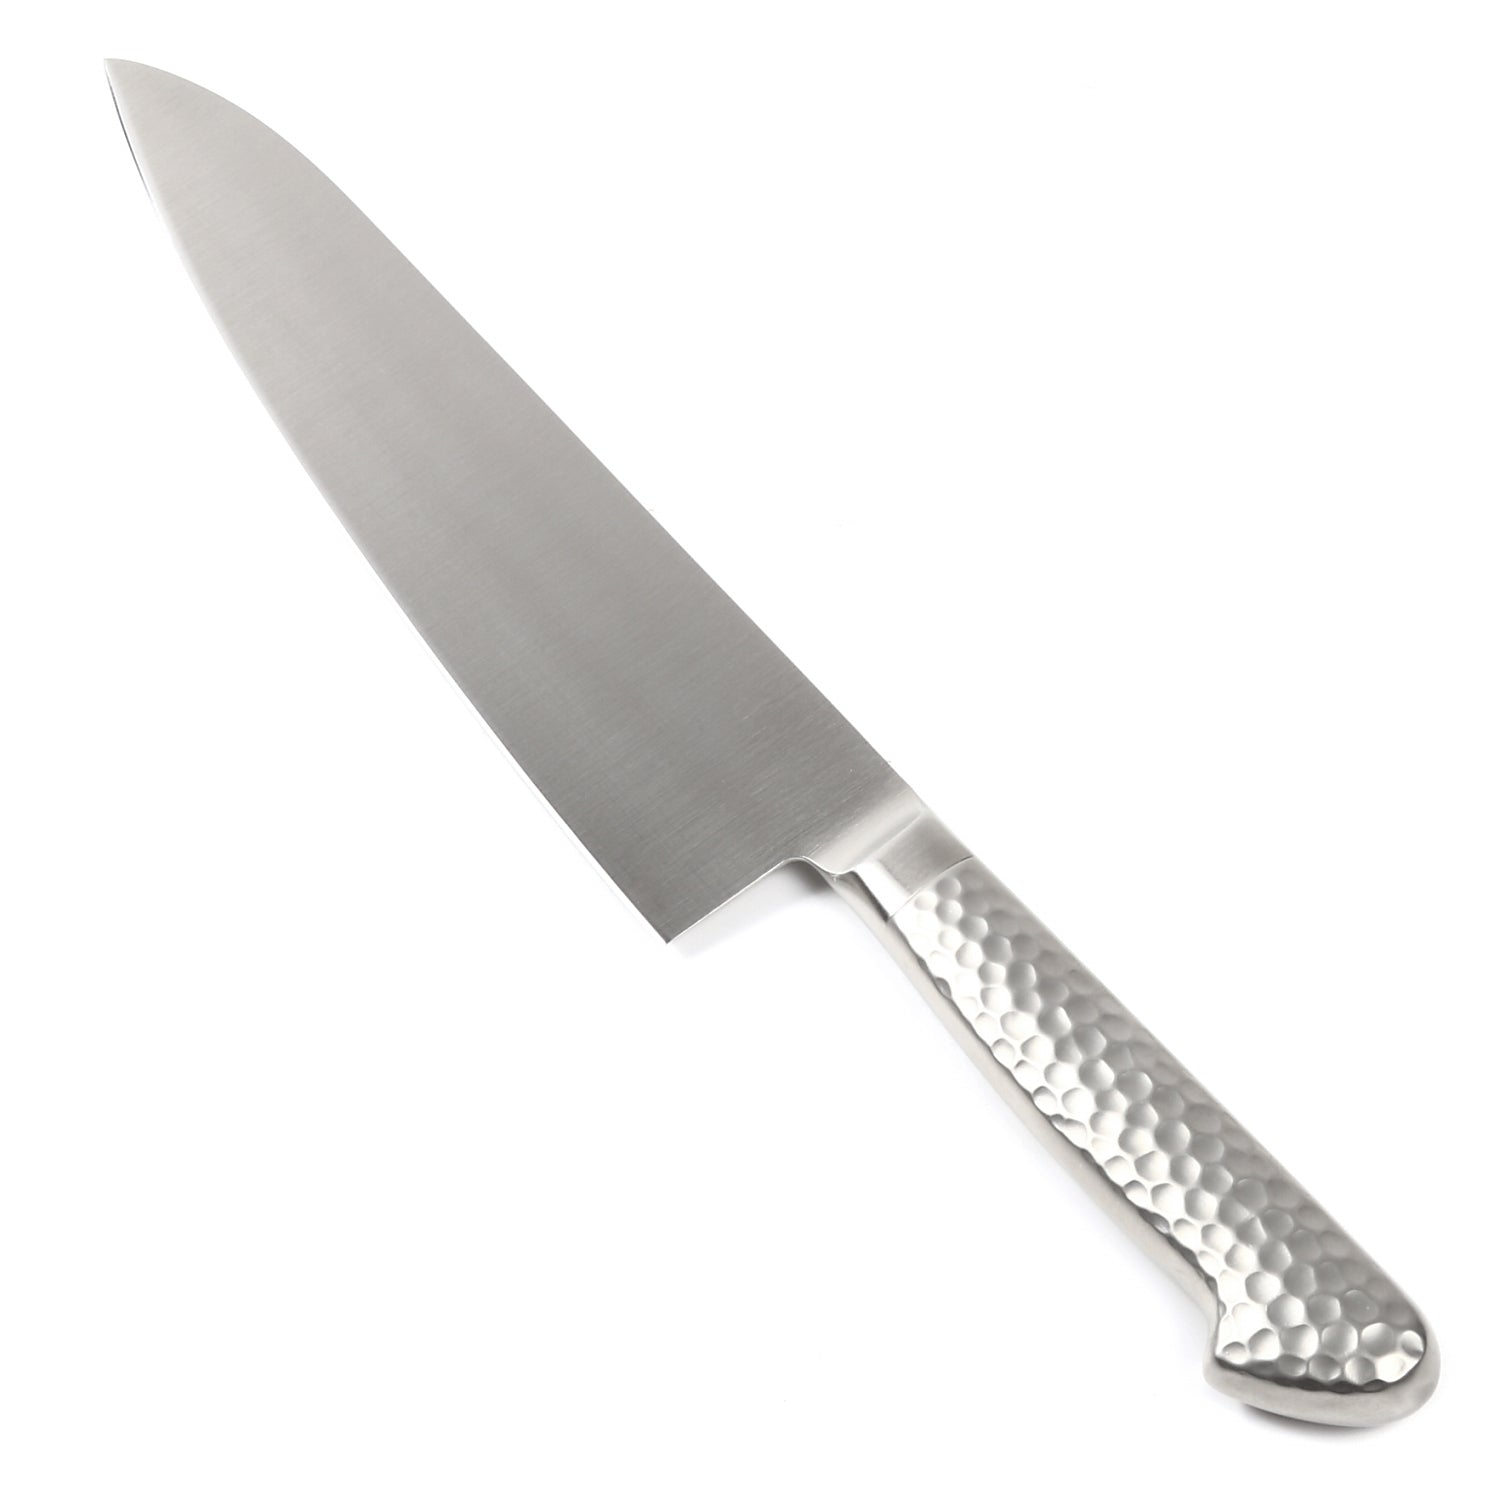 Syosaku Japanese Best Sharp Kitchen Chef Knife INOX AUS-8A Stainless Steel Integrated Handle, Gyuto 8.3-inch (210mm) - Syosaku-Japan